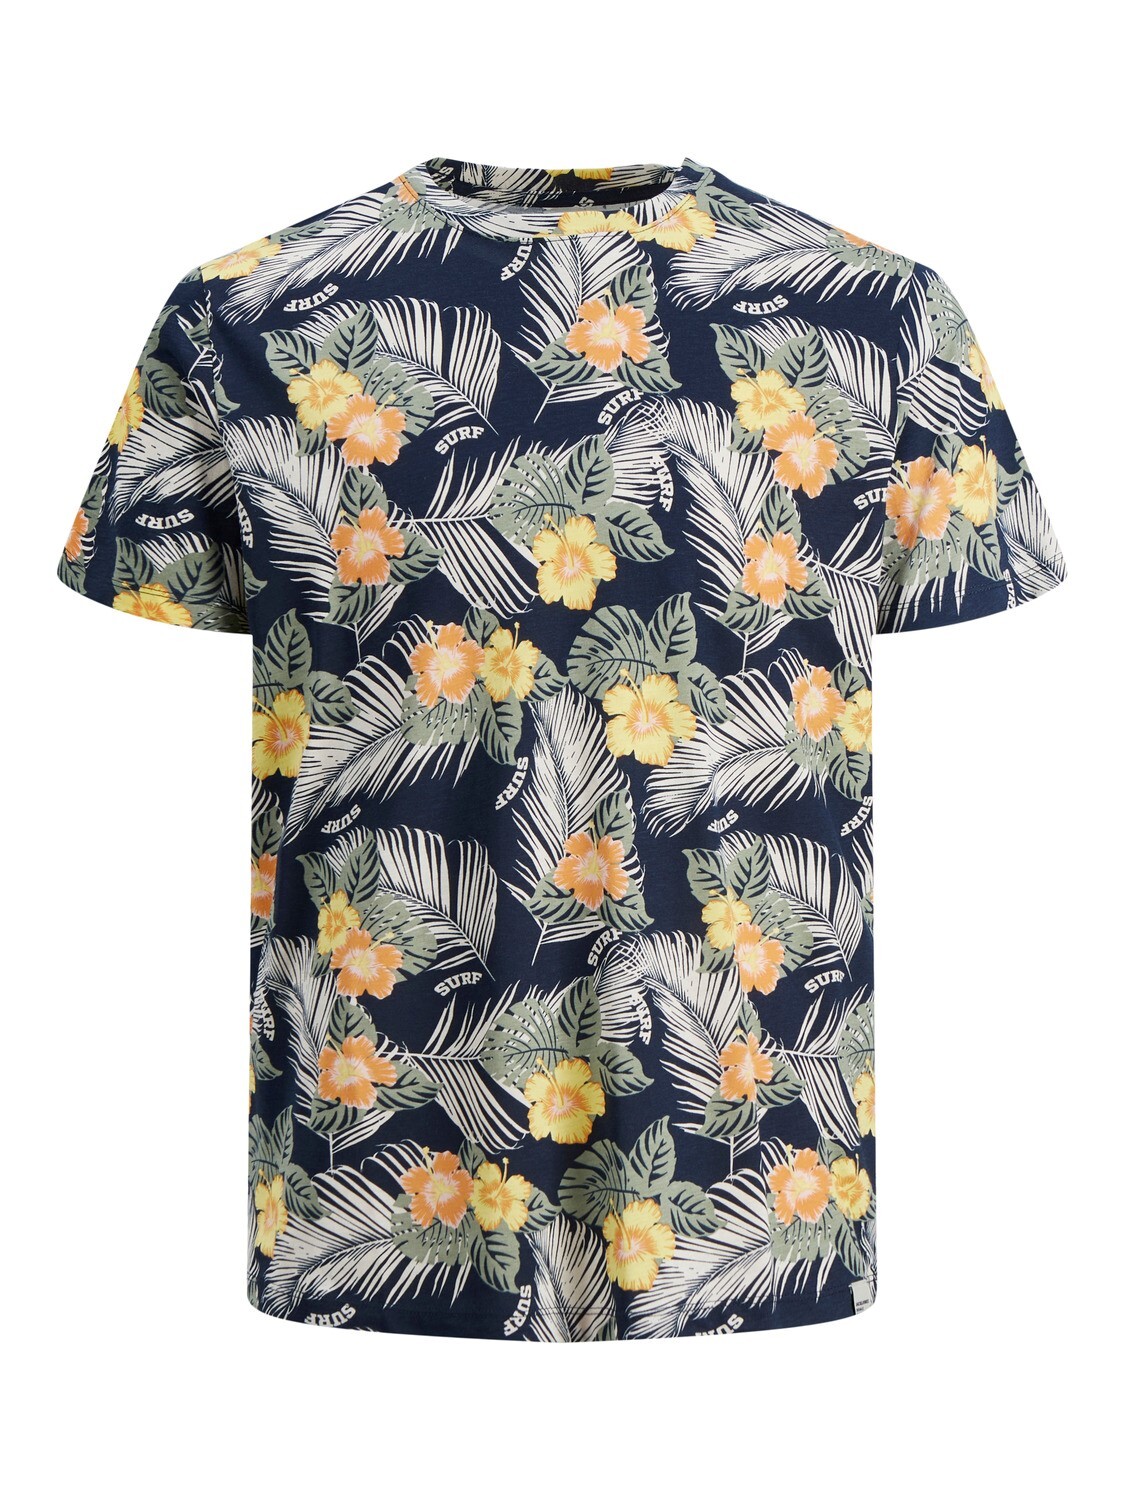 Jack&Jones T-Shirt Tropical Print Navy